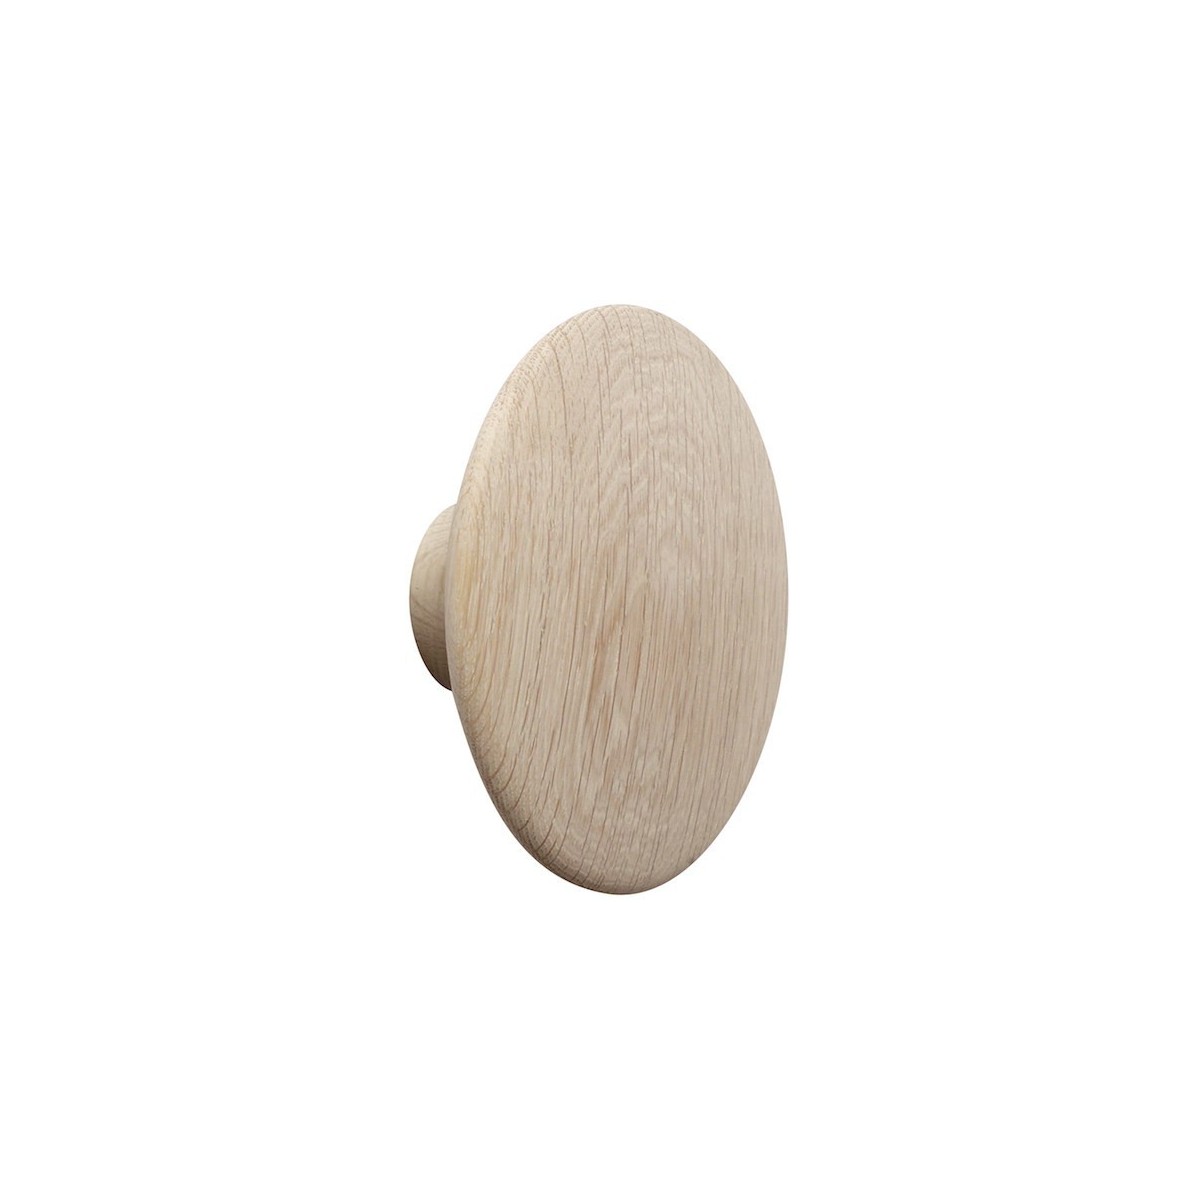 Ø6,5 cm (XS) - oak - The Dots wood